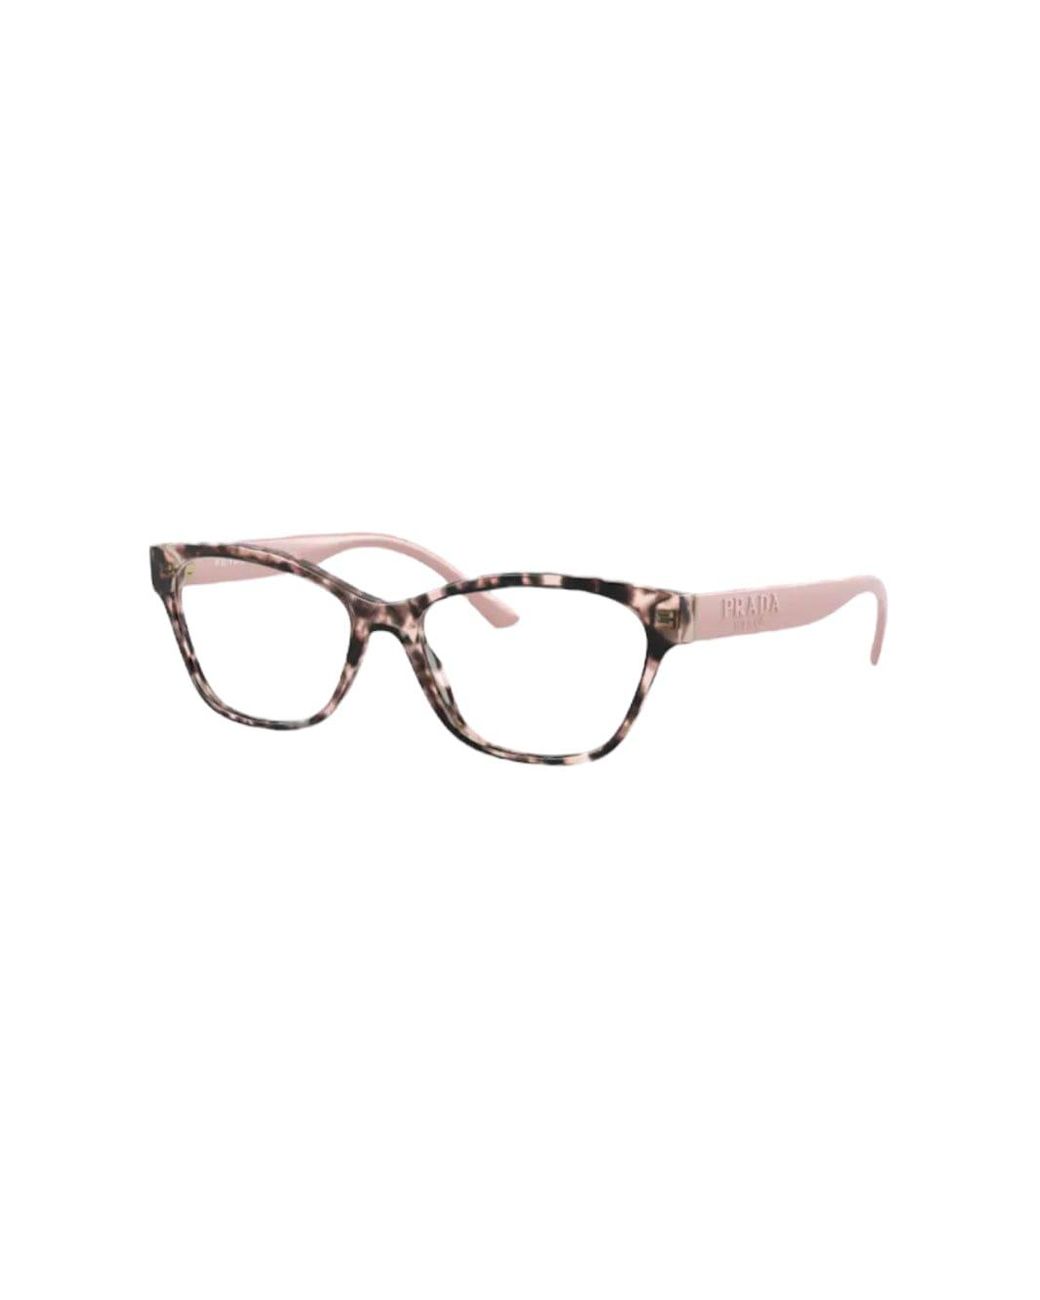 Prada Opr 03wv - Pink Glasses | Lyst